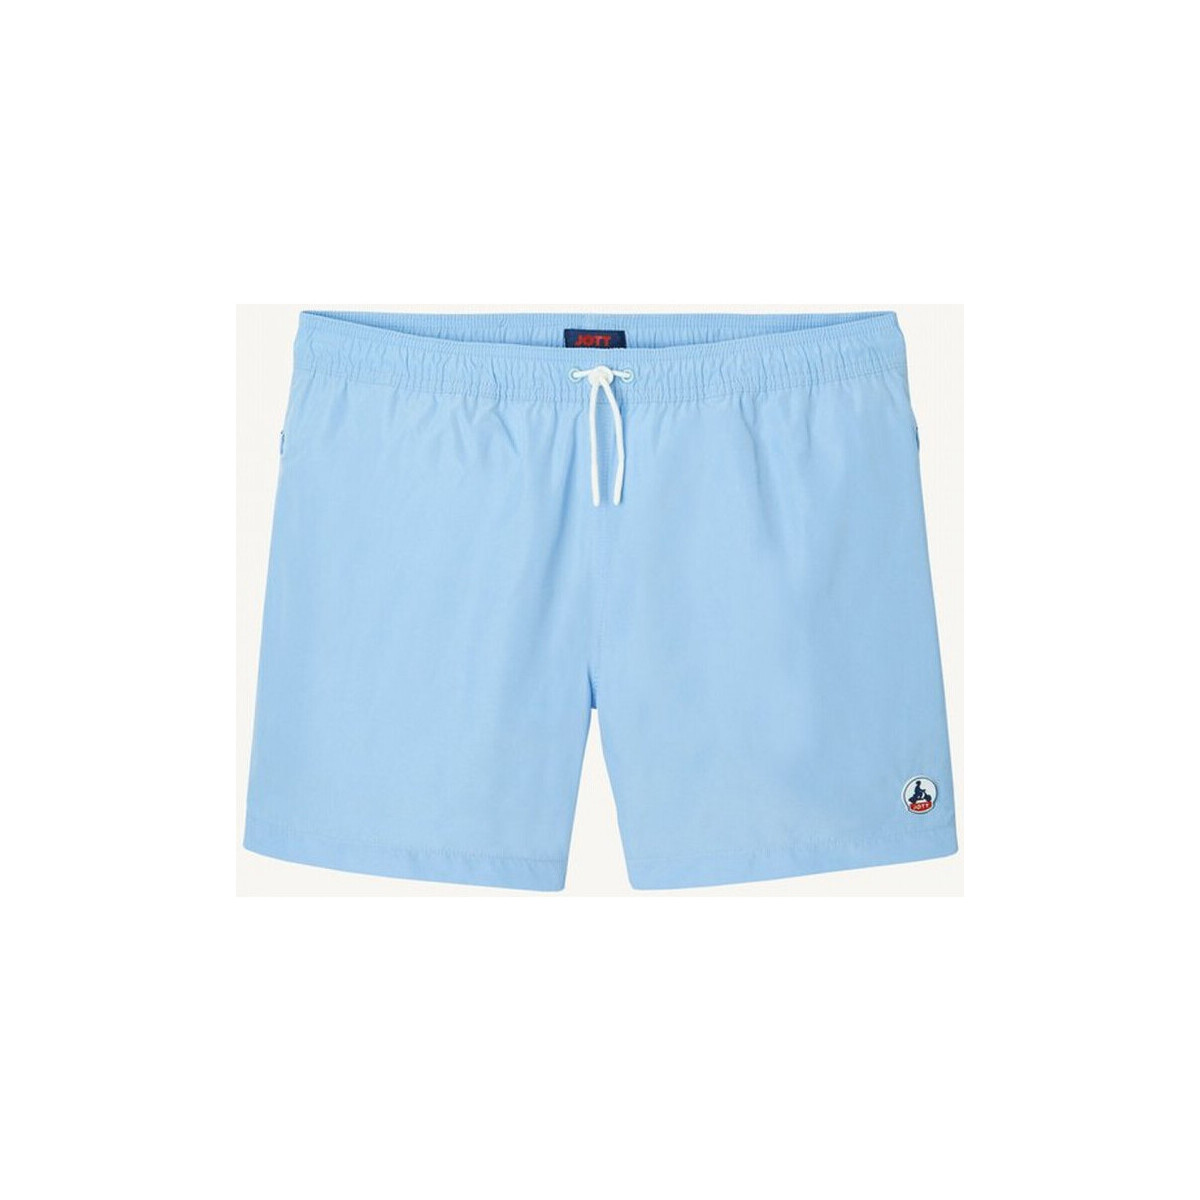 Vêtements Homme Maillots / Shorts de bain JOTT Biarritz Bleu